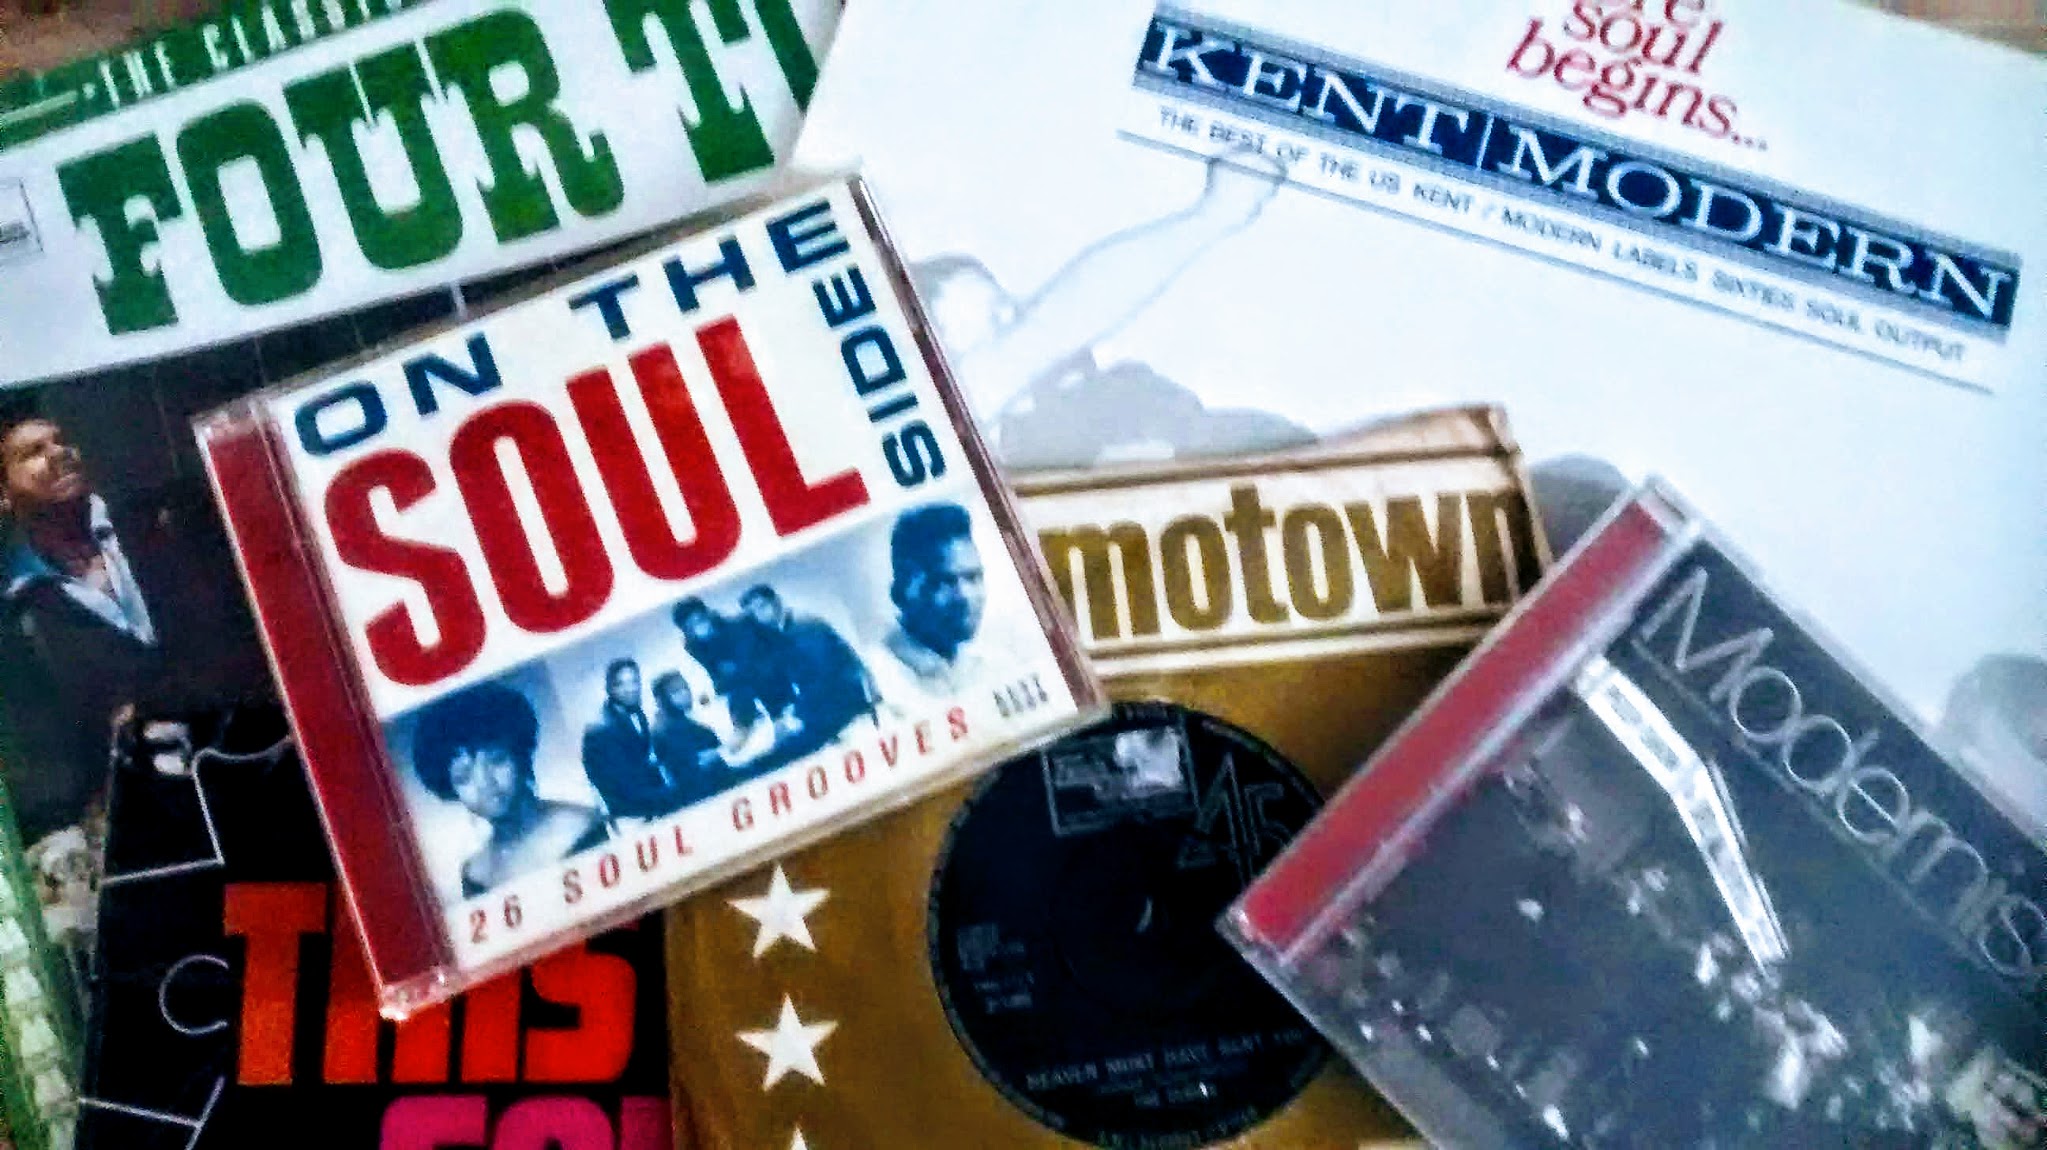 1980's Mod Girl Music Memories - Kent-Records, 60's Soul & Tamla Motown